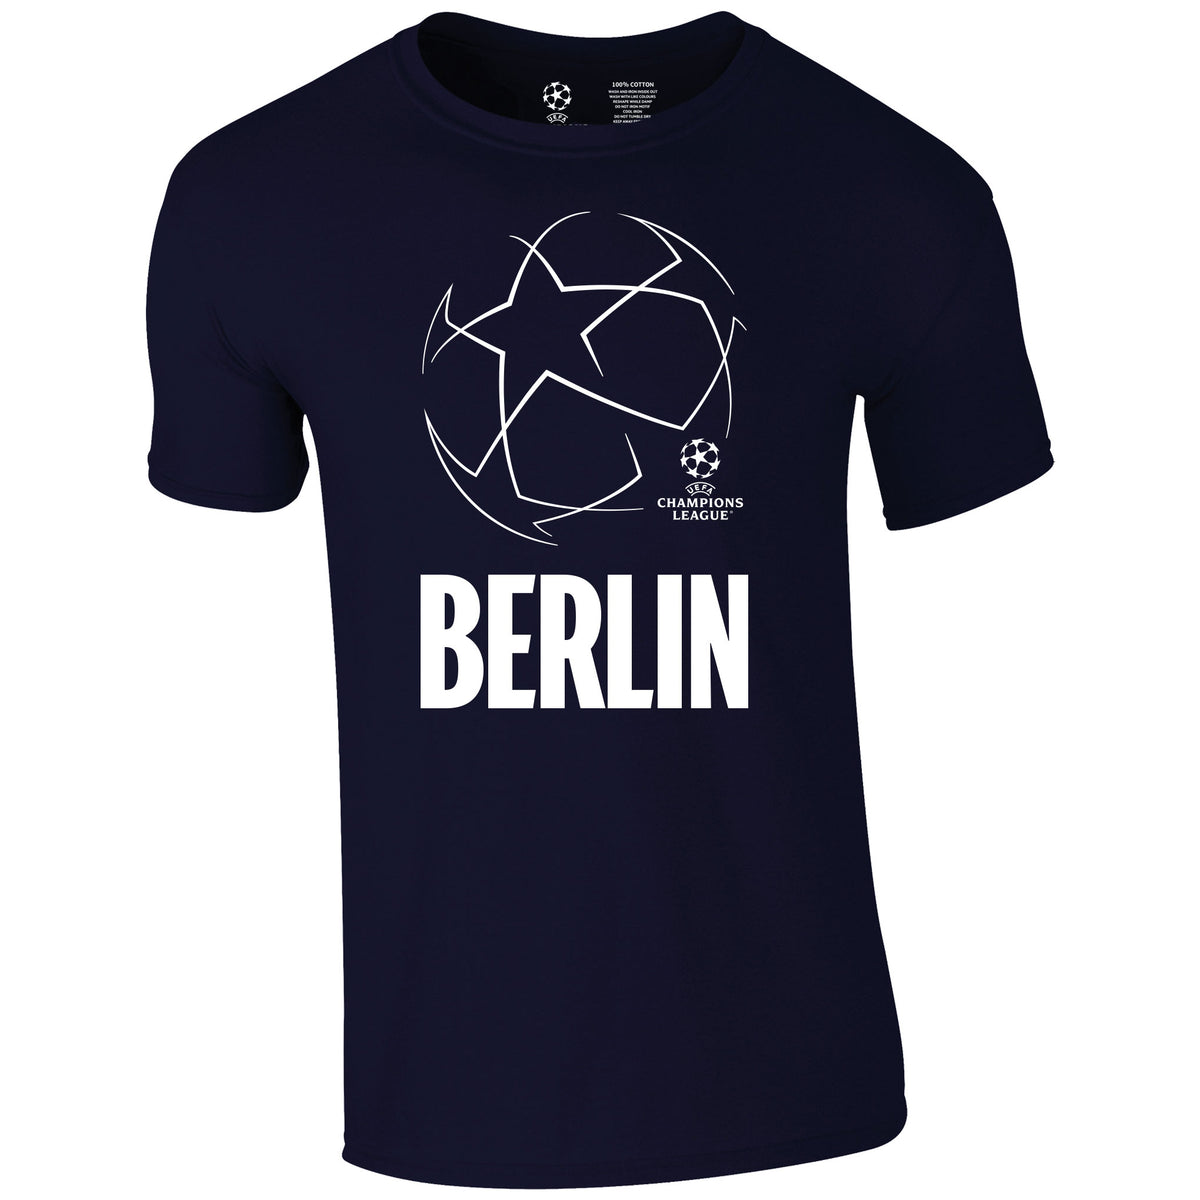 Champions League Starball Berlin City T-Shirt Navy